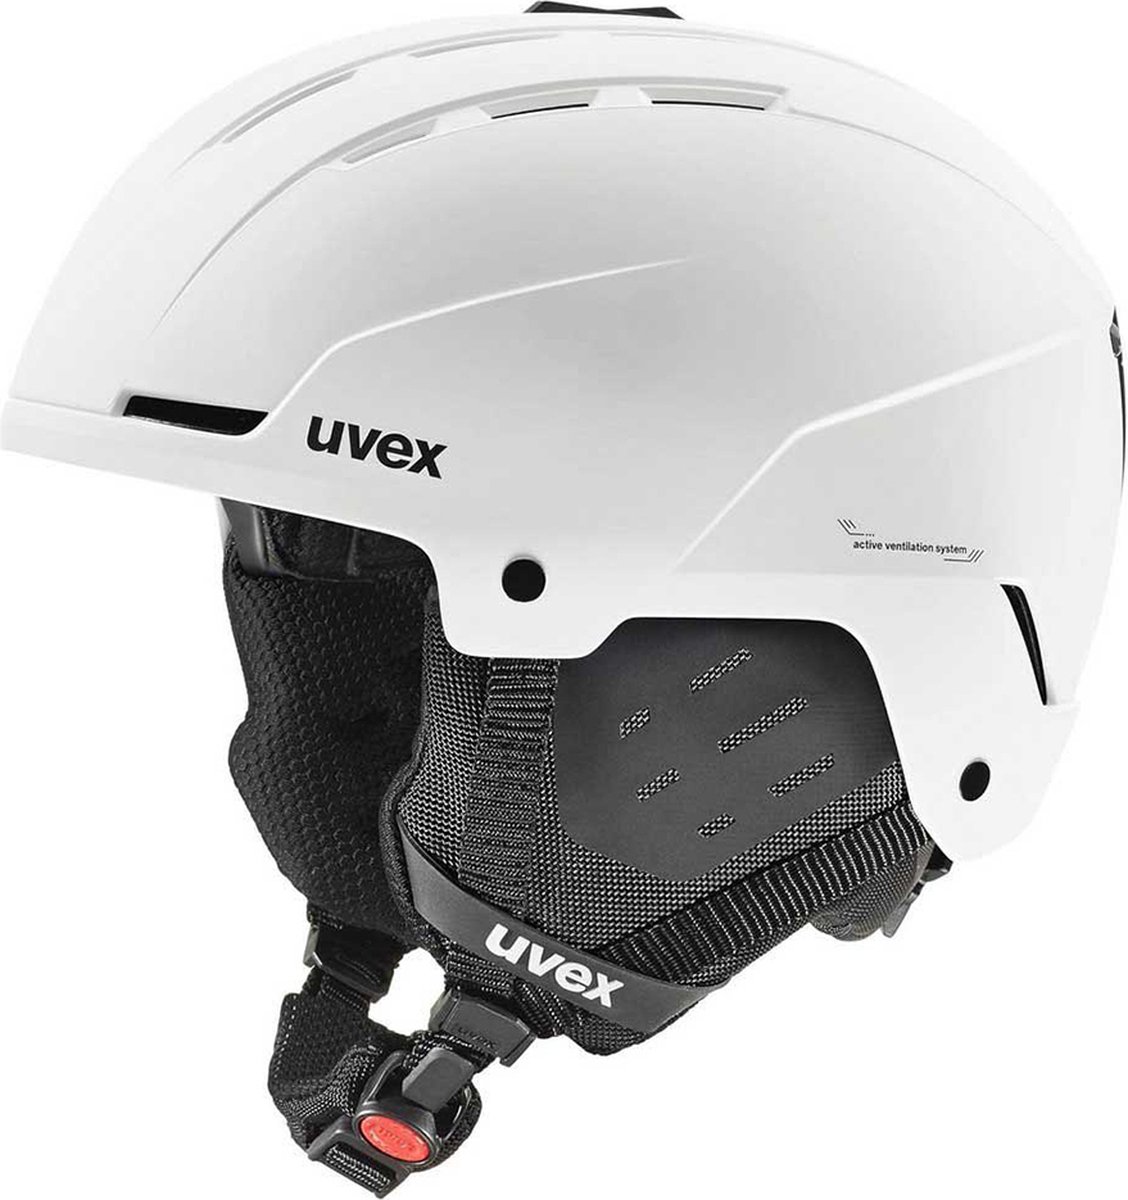 Uvex skihelm Stance Wit - Maat 51-55